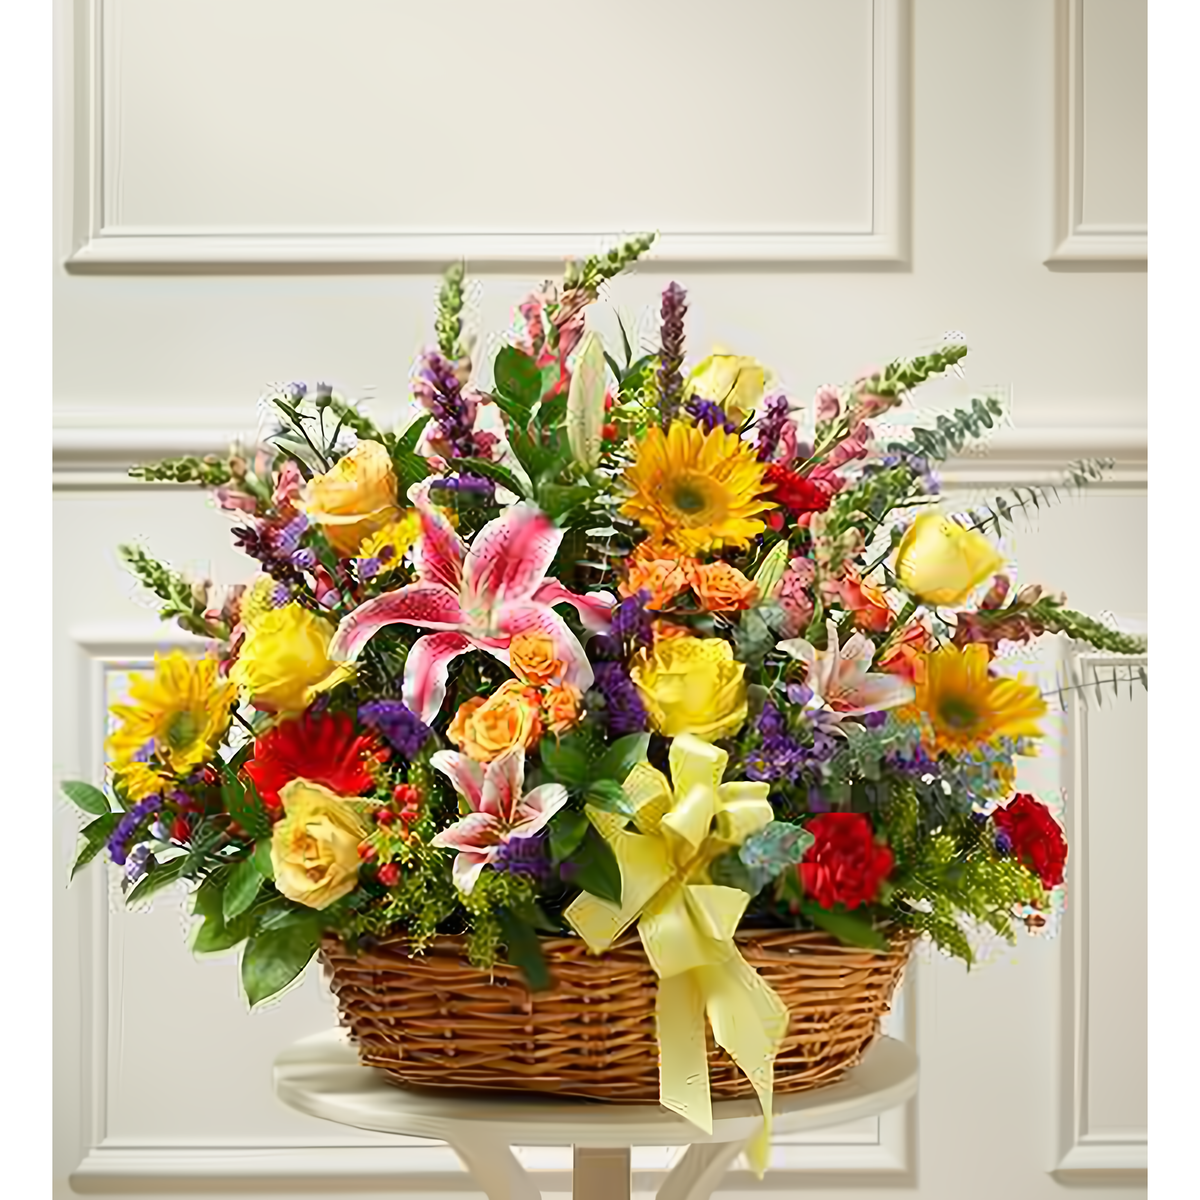 Bright Flower Sympathy Arrangement in Basket - Funeral &gt; For the Service